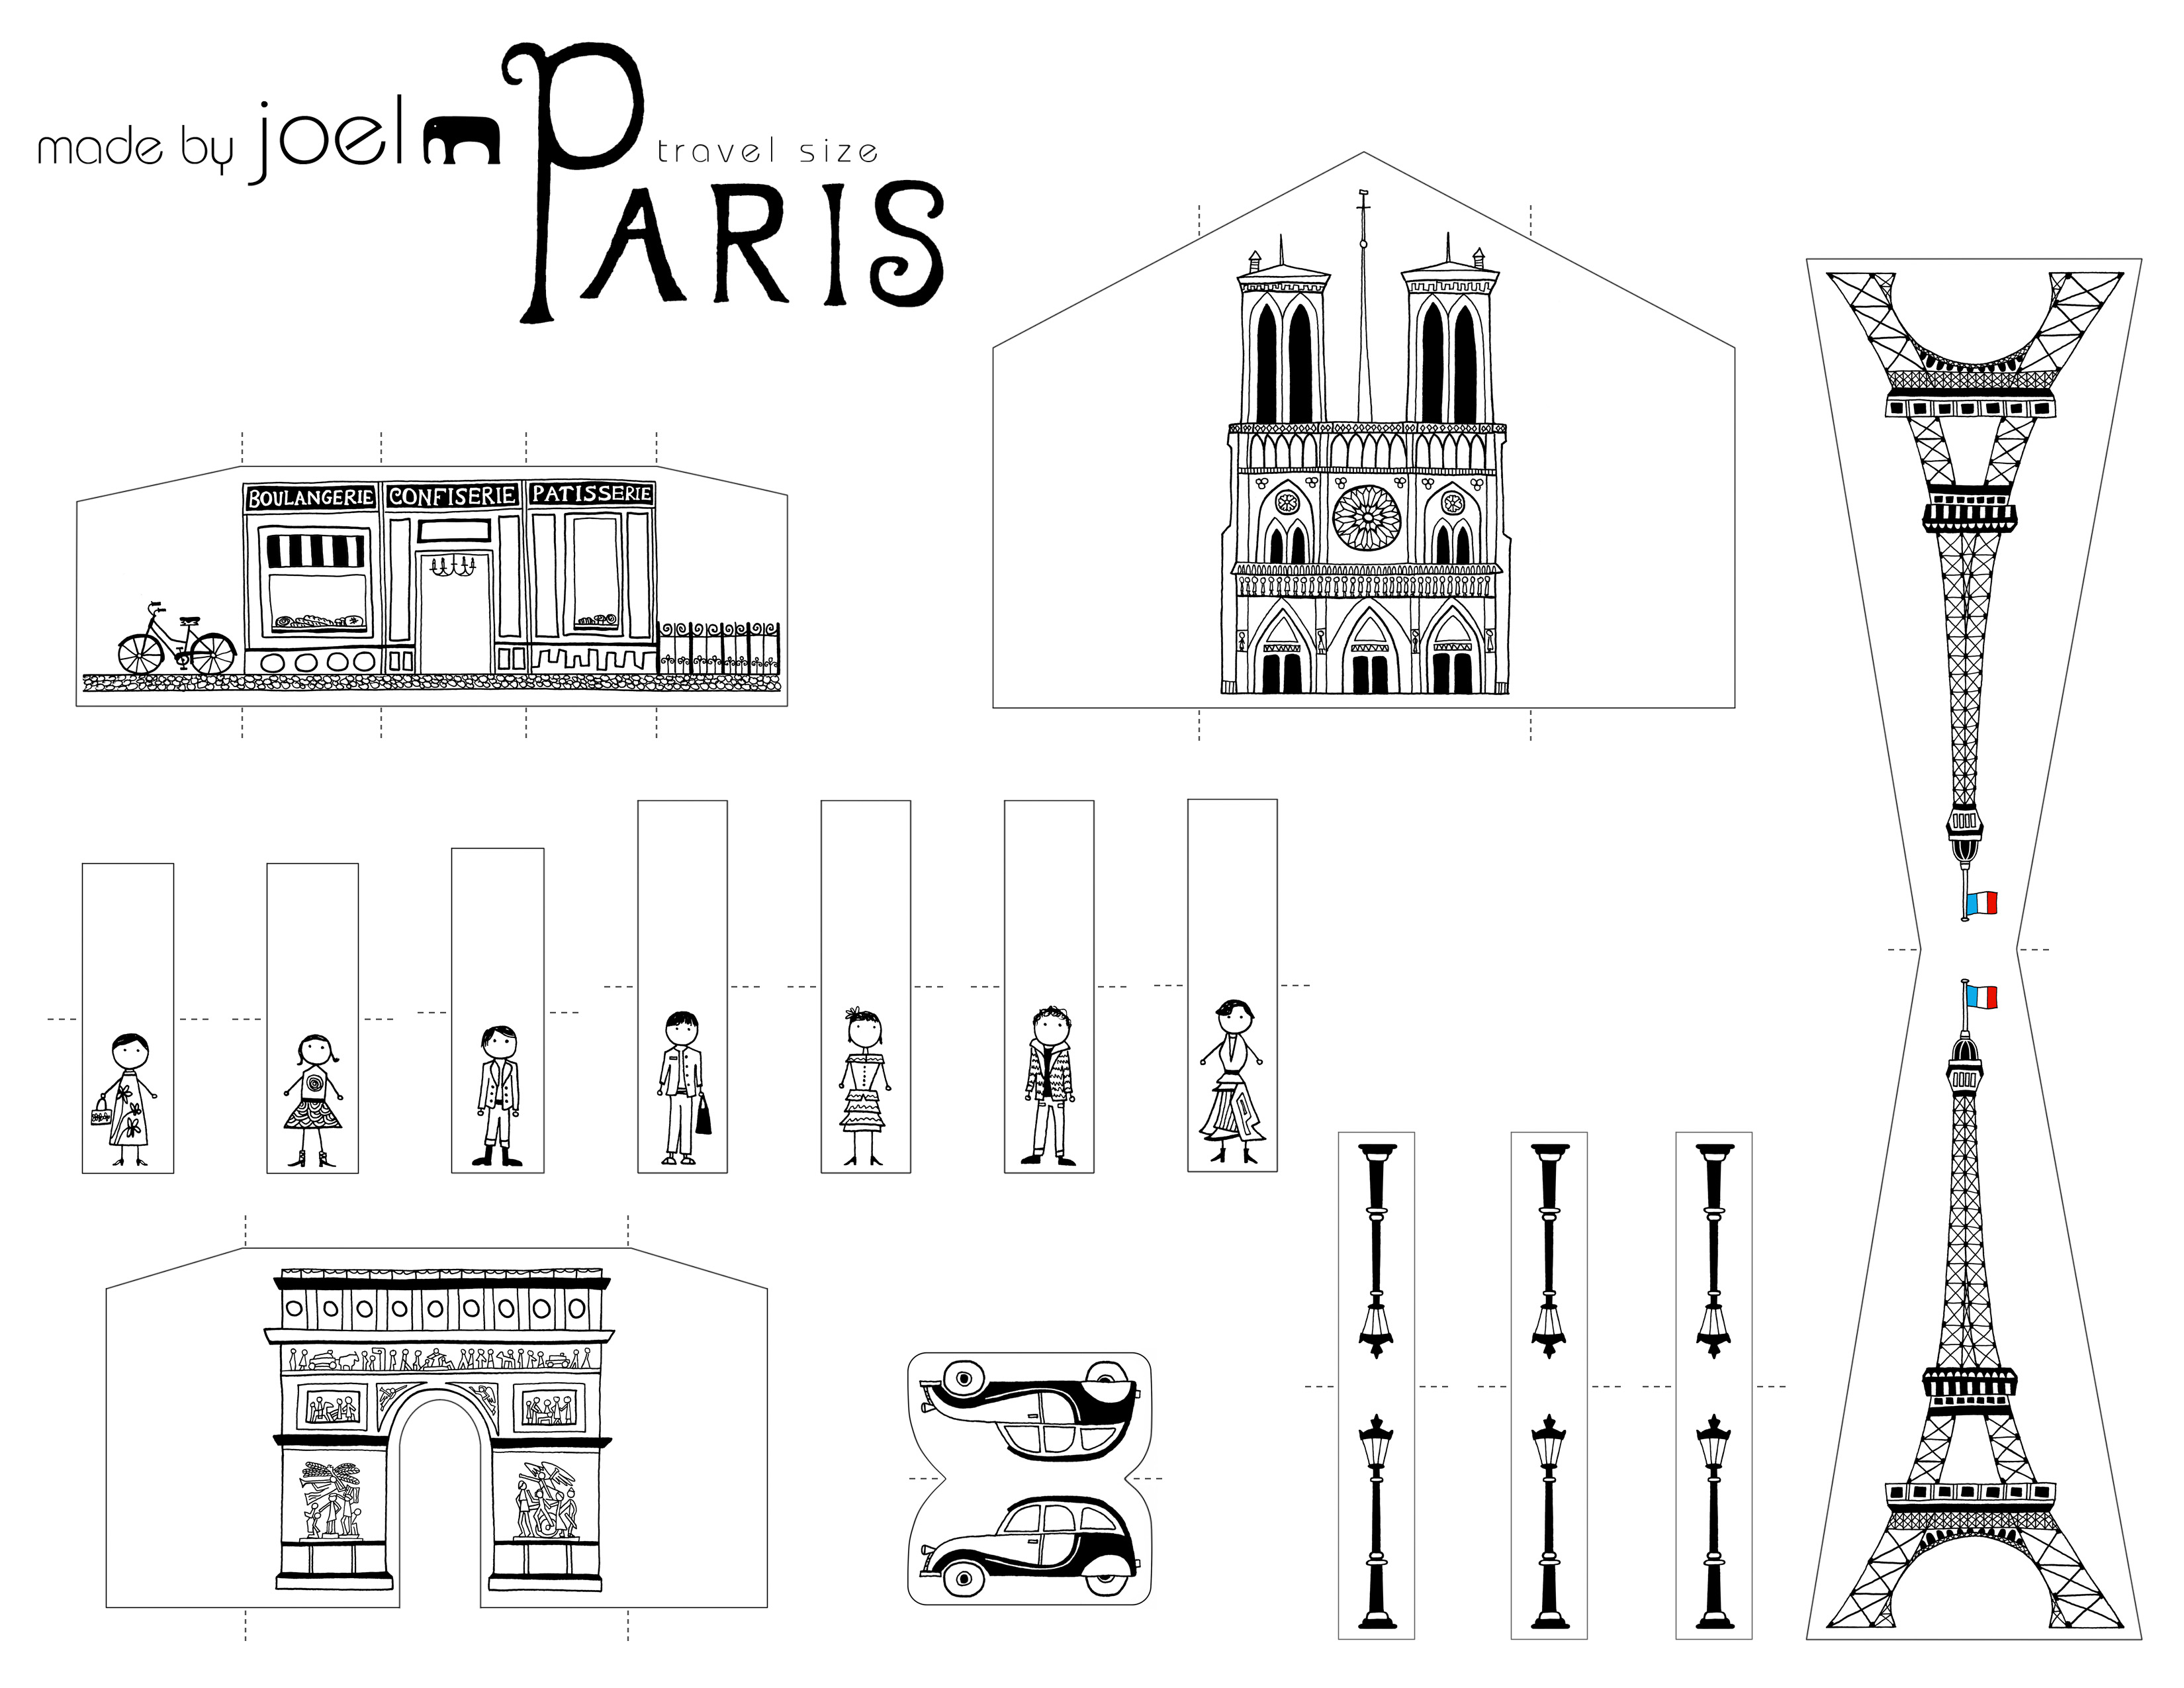 http://madebyjoel.com/wp-content/uploads/2012/01/Made-by-Joel-Travel-Size-Paper-City-Paris.jpg